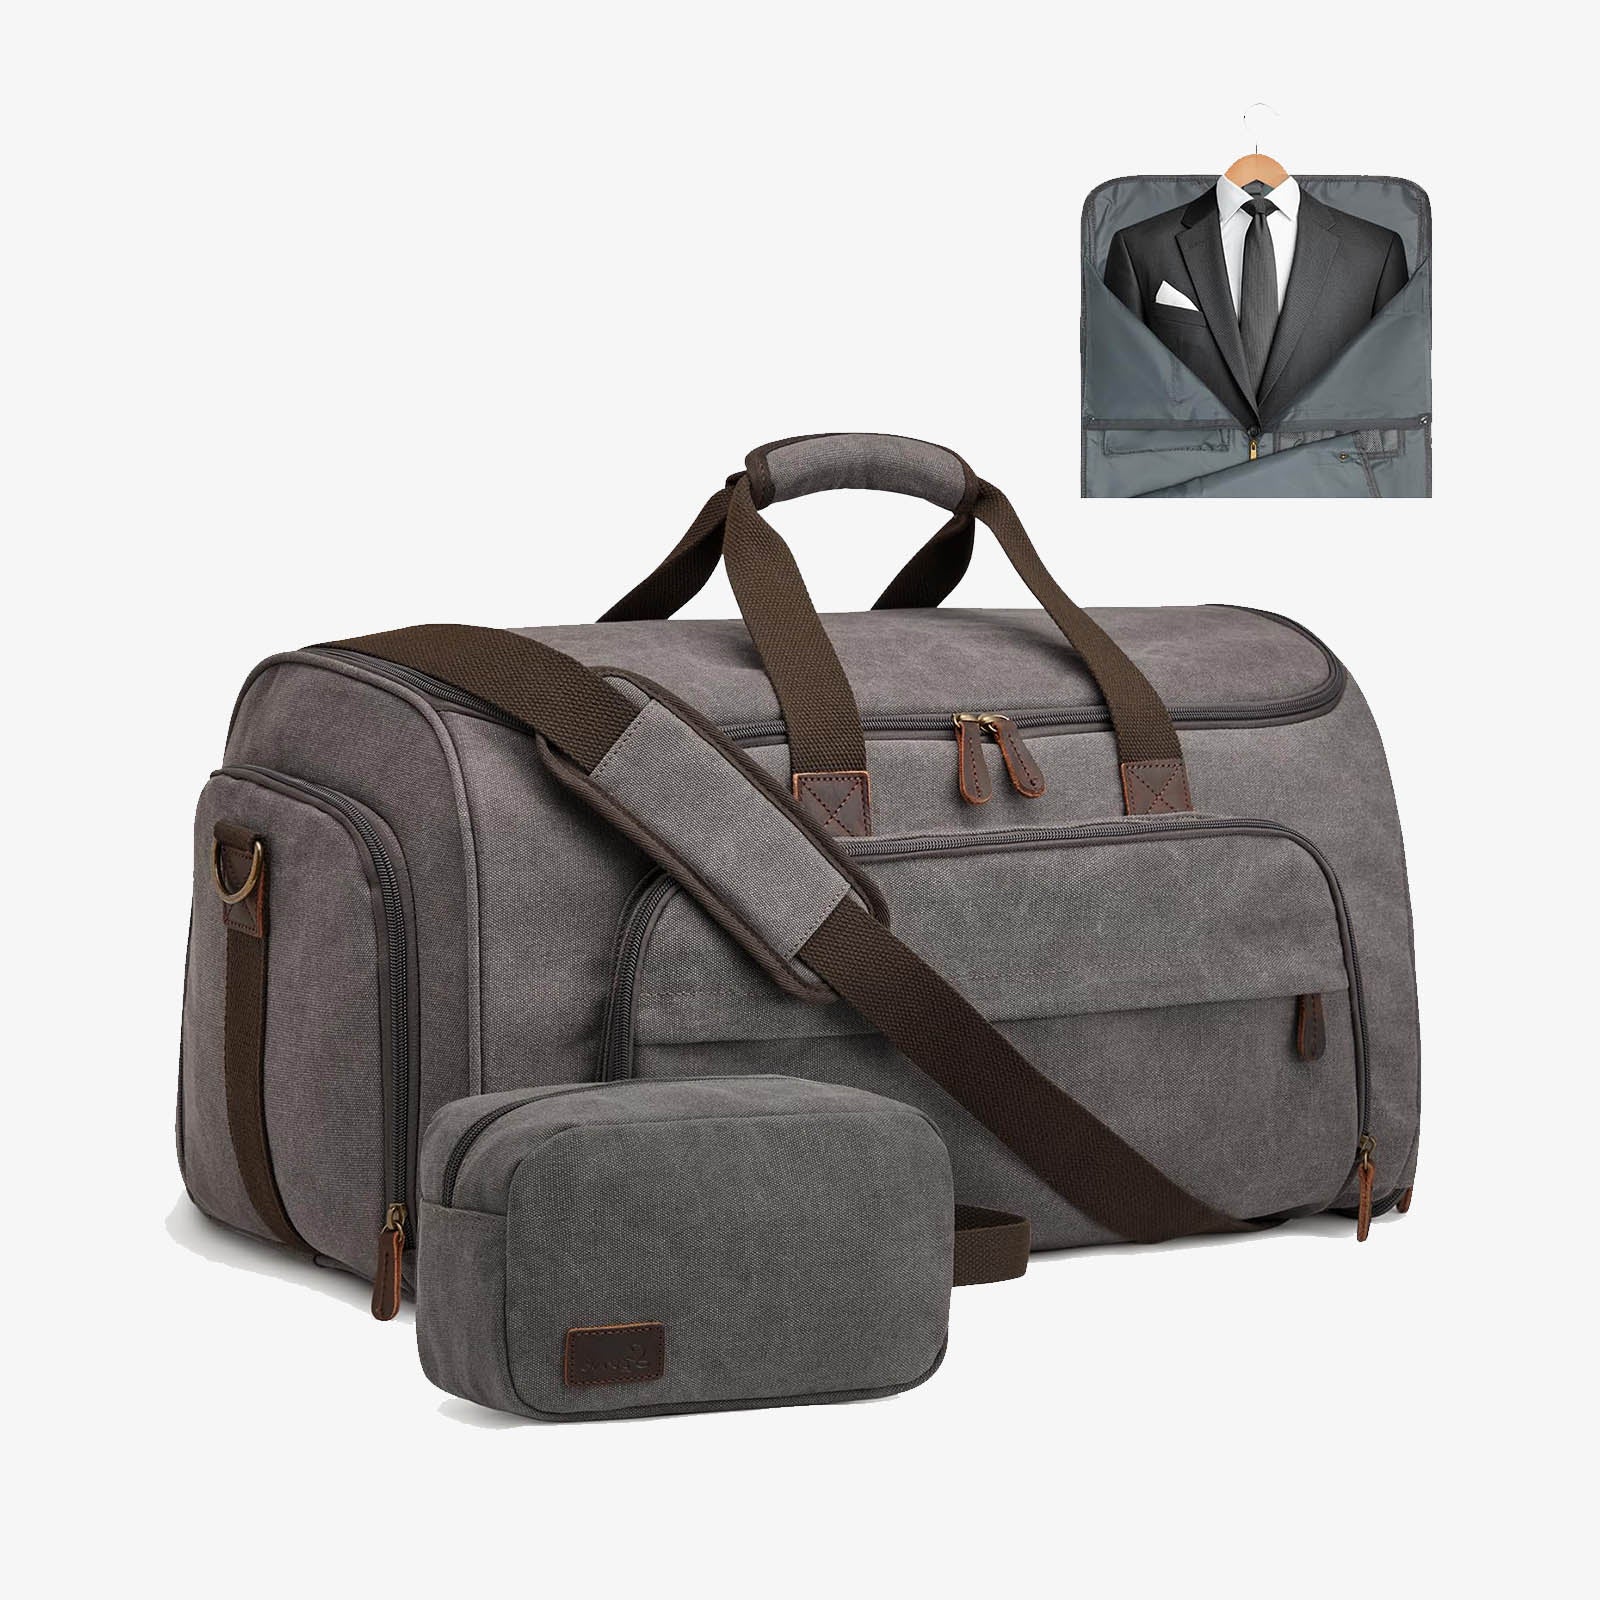 SFFashion™ 52L Leather Weekender Duffel Bag w/ Shoe Compartment